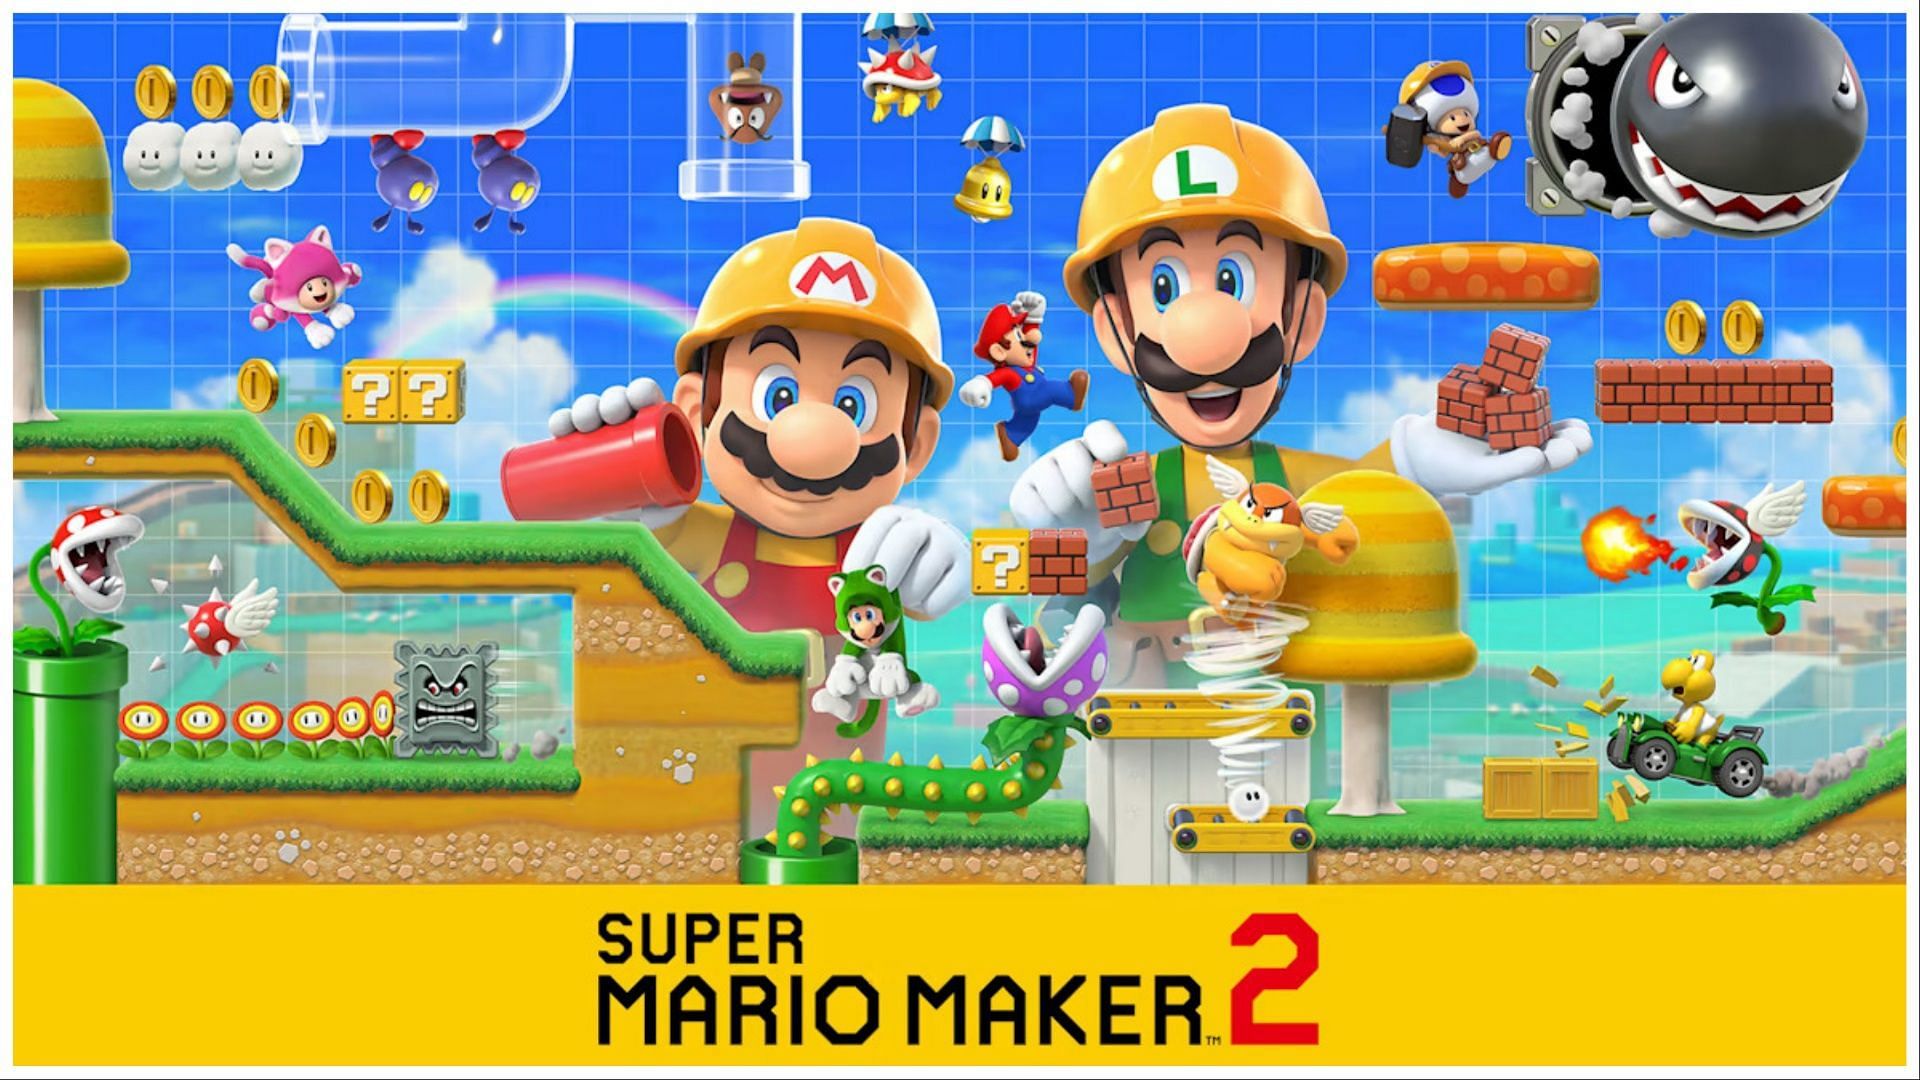 Super Mario Maker 2 (Image via Nintendo)